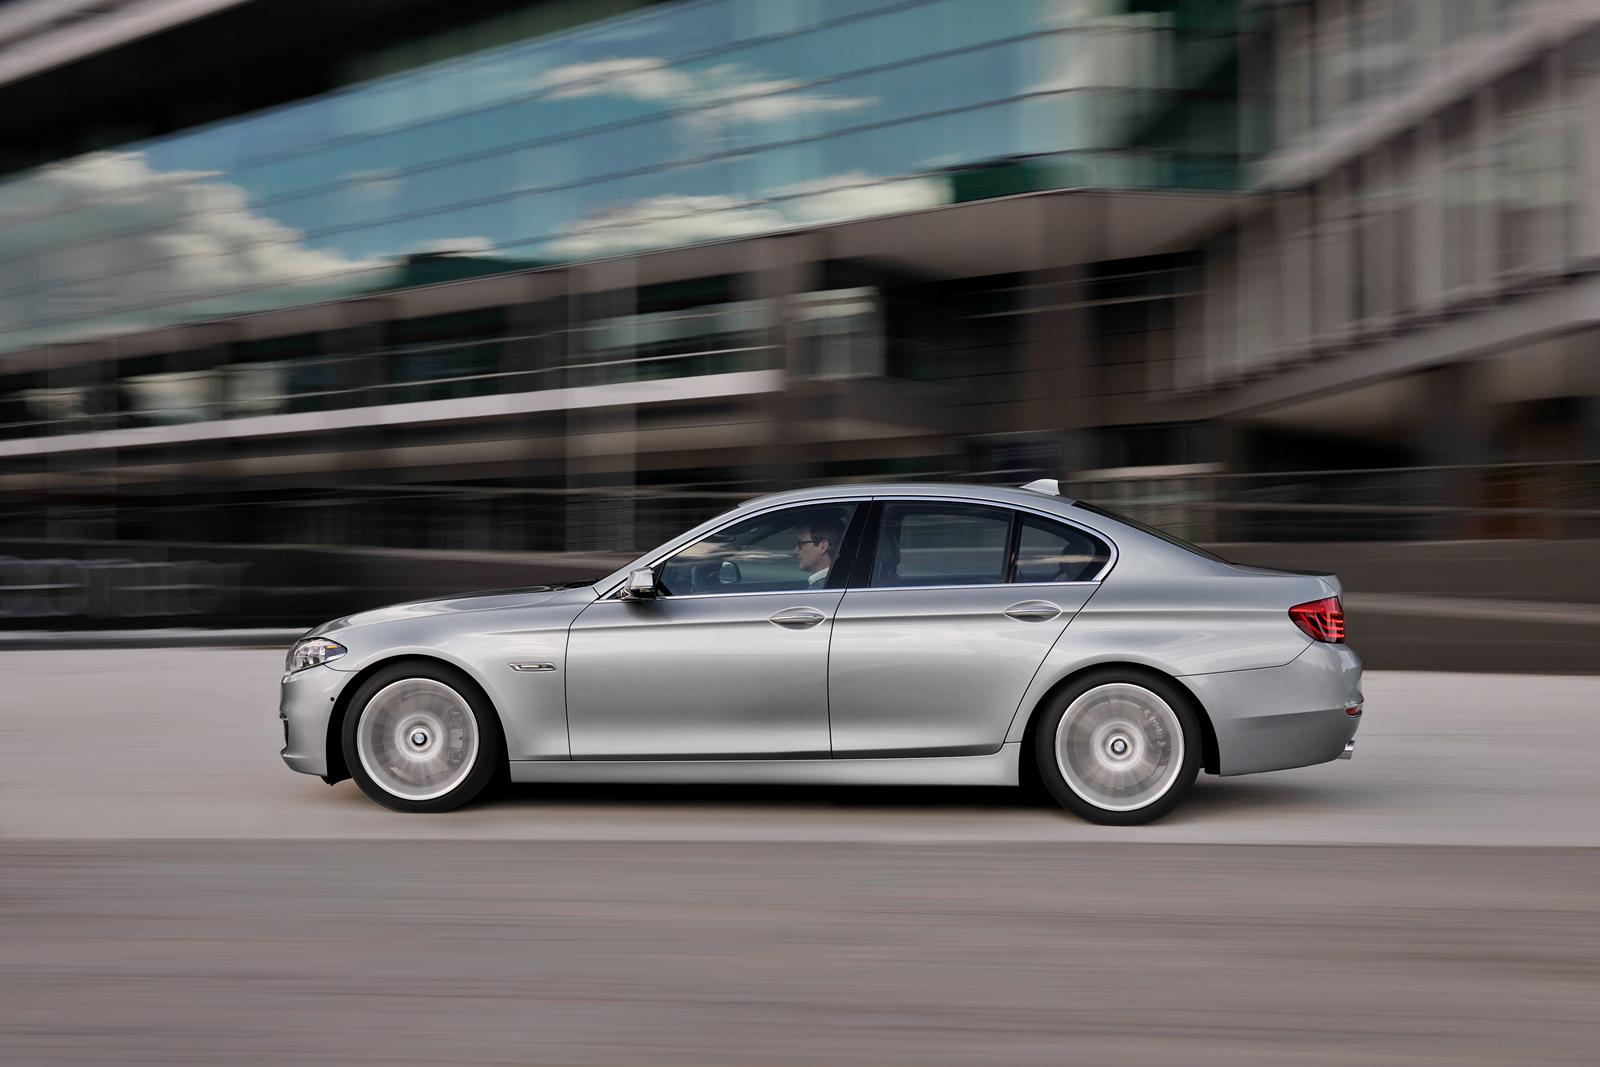 2014 BMW 5-Series Gran Turismo Luxury Line - Side